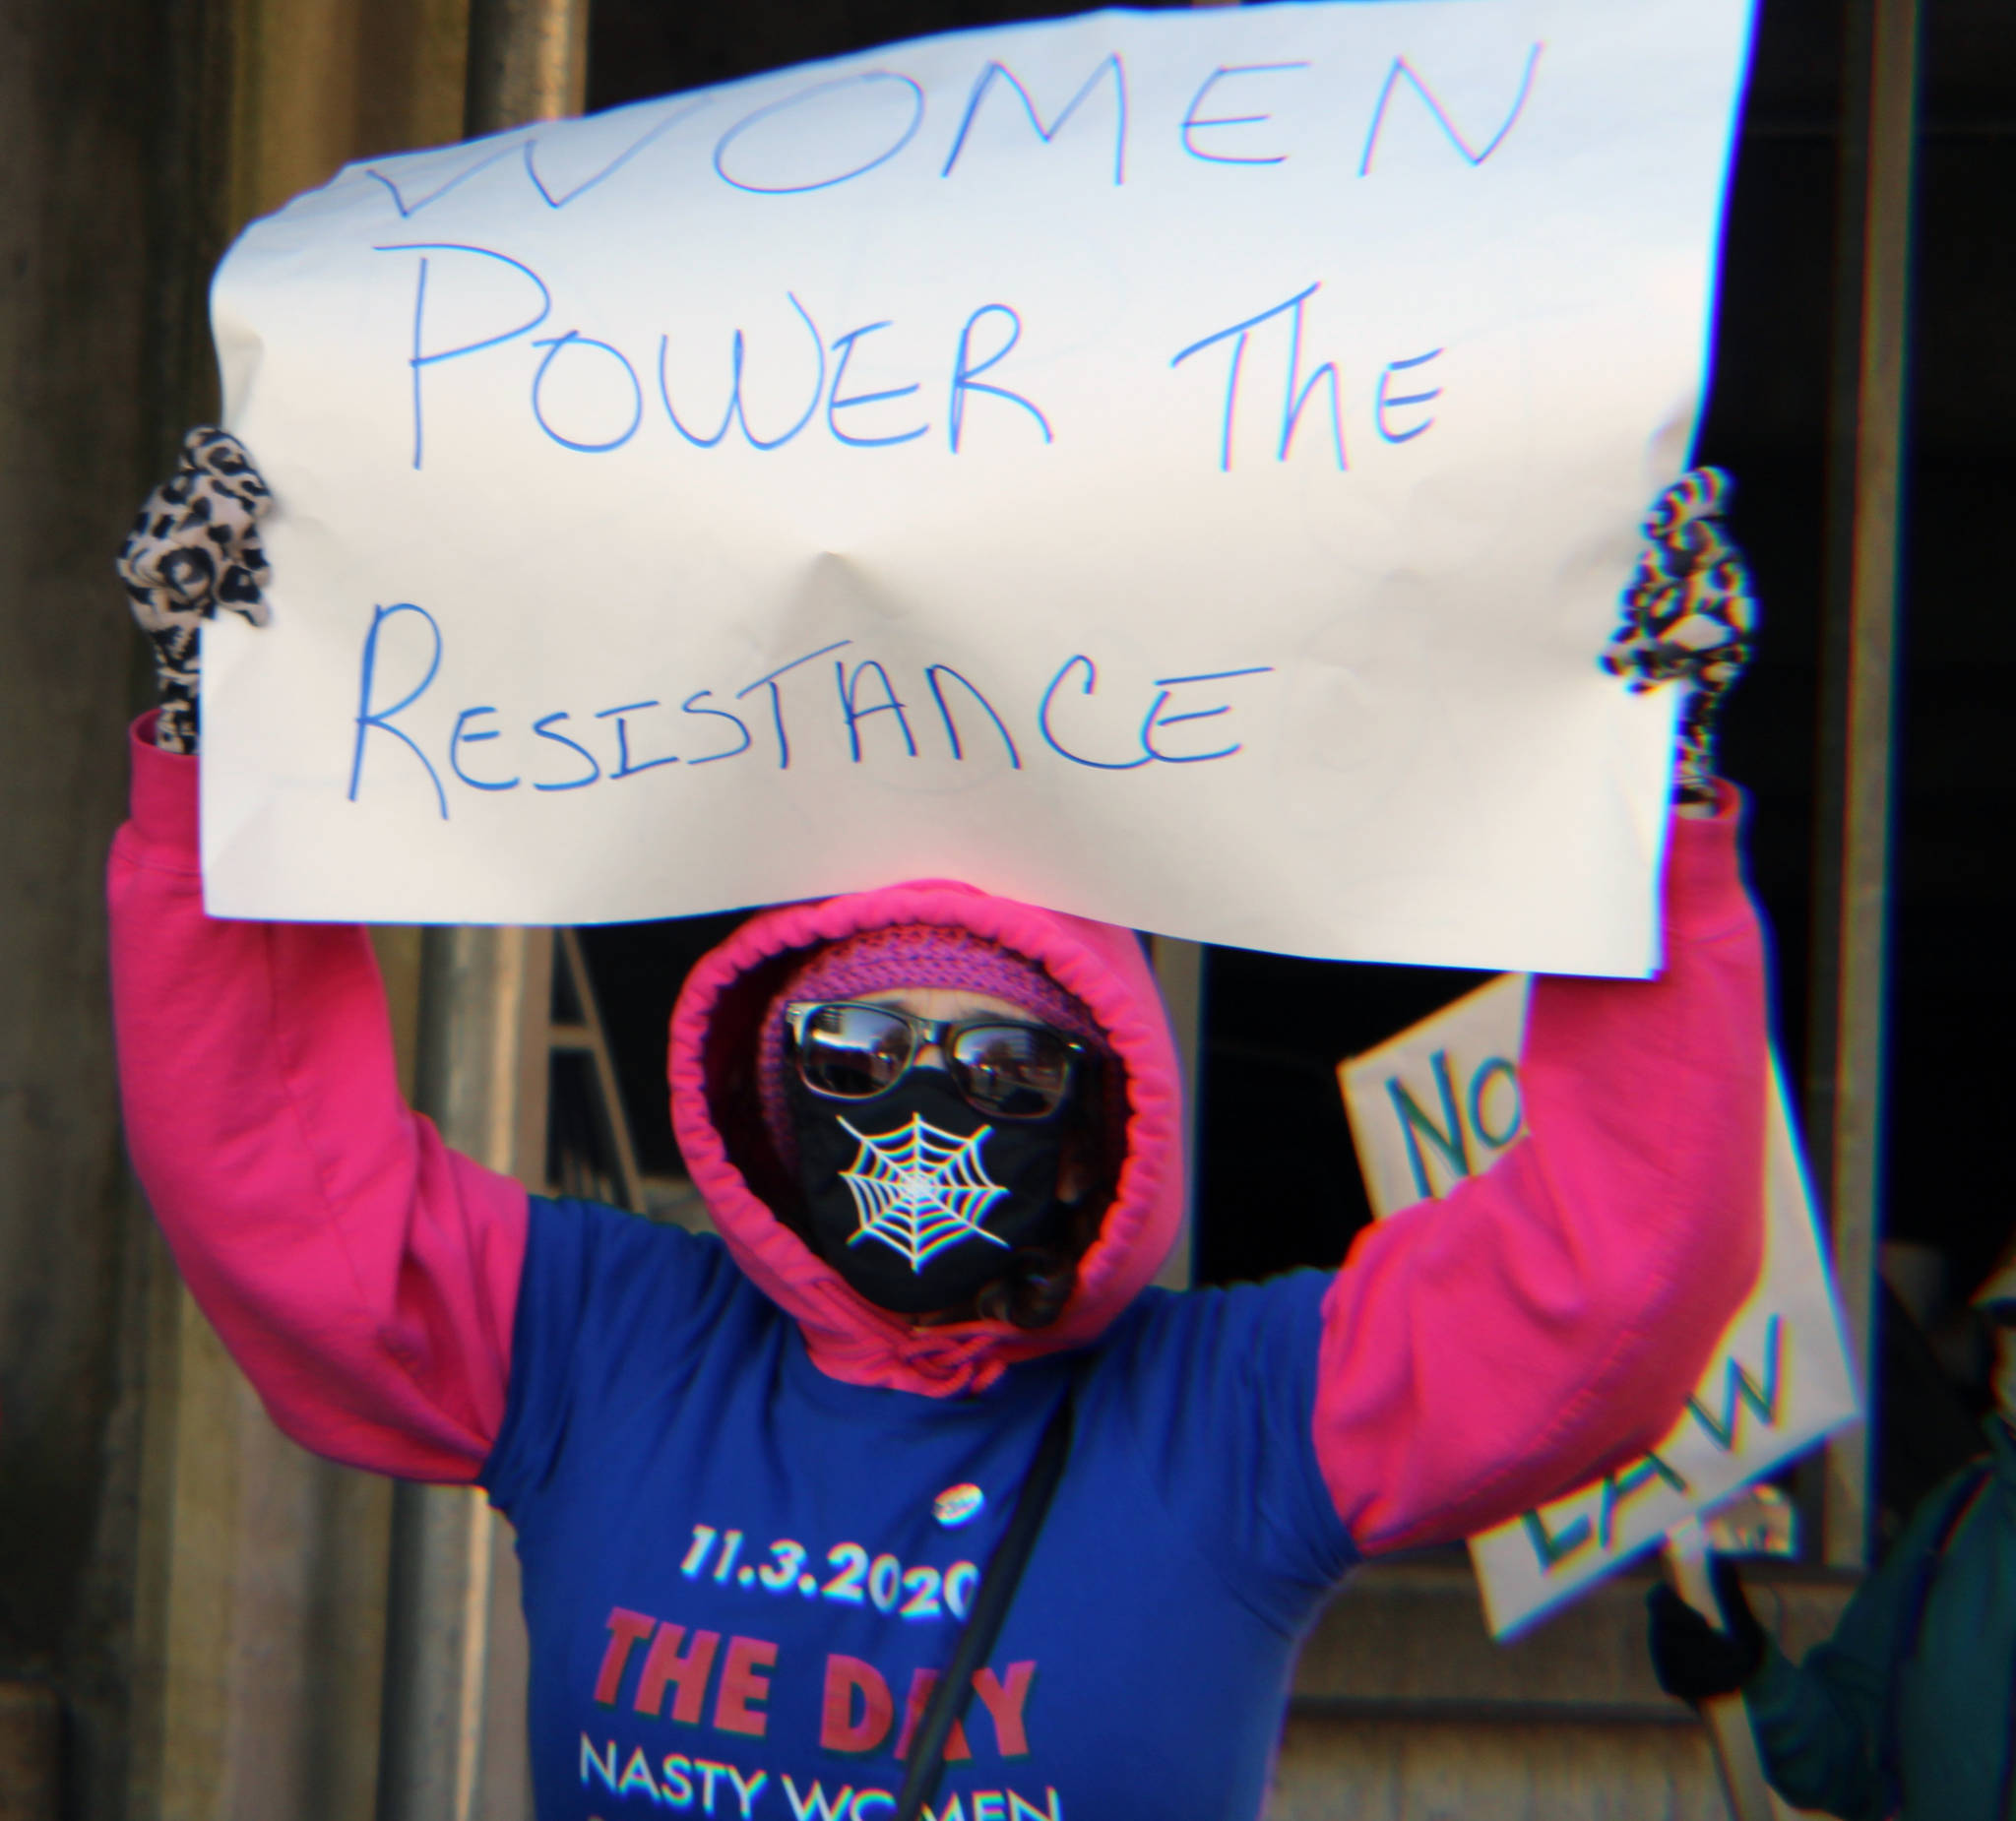 Gina Chalcroft holds up a sign stating “Women power the resistance” on Saturday, Oct. 17. (Ben Hohenstatt / Juneau Empire)